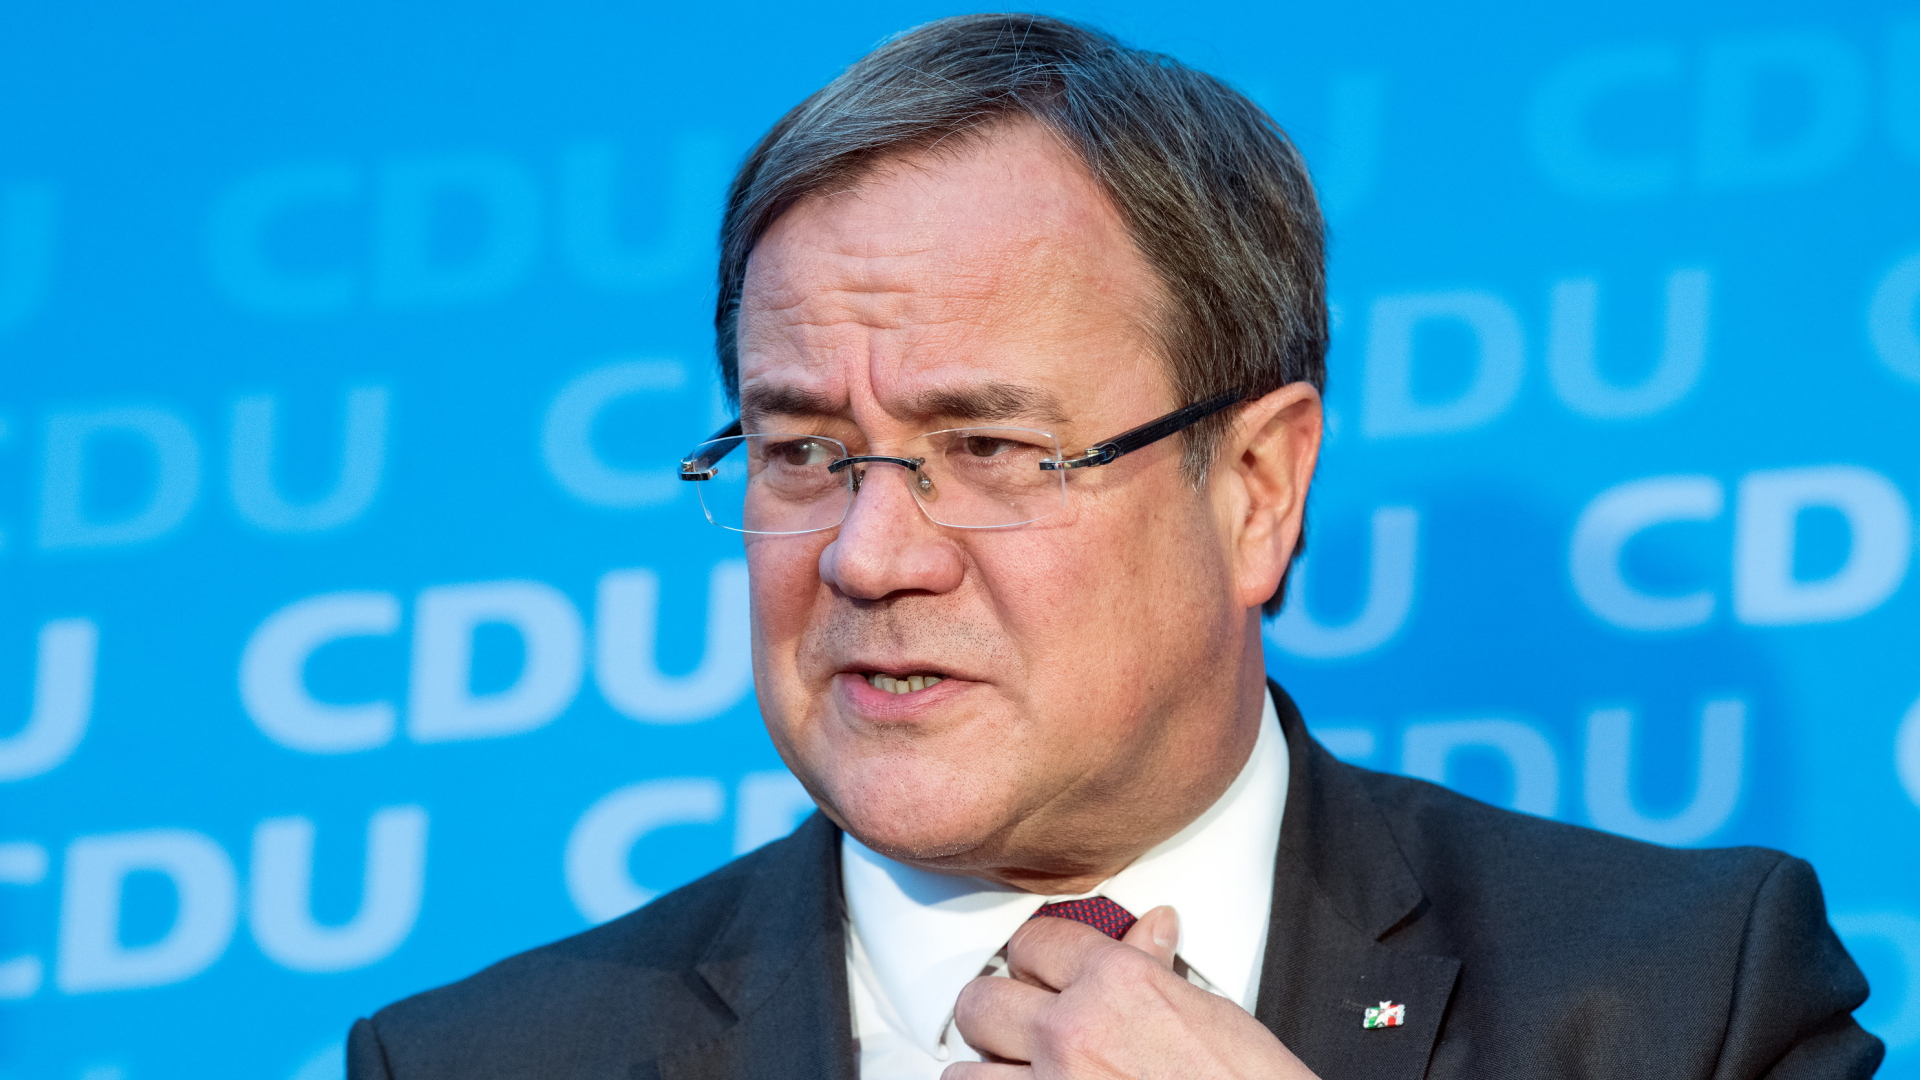 NRW-Ministerpräsident und CDU-Vize Armin Laschet | dpa